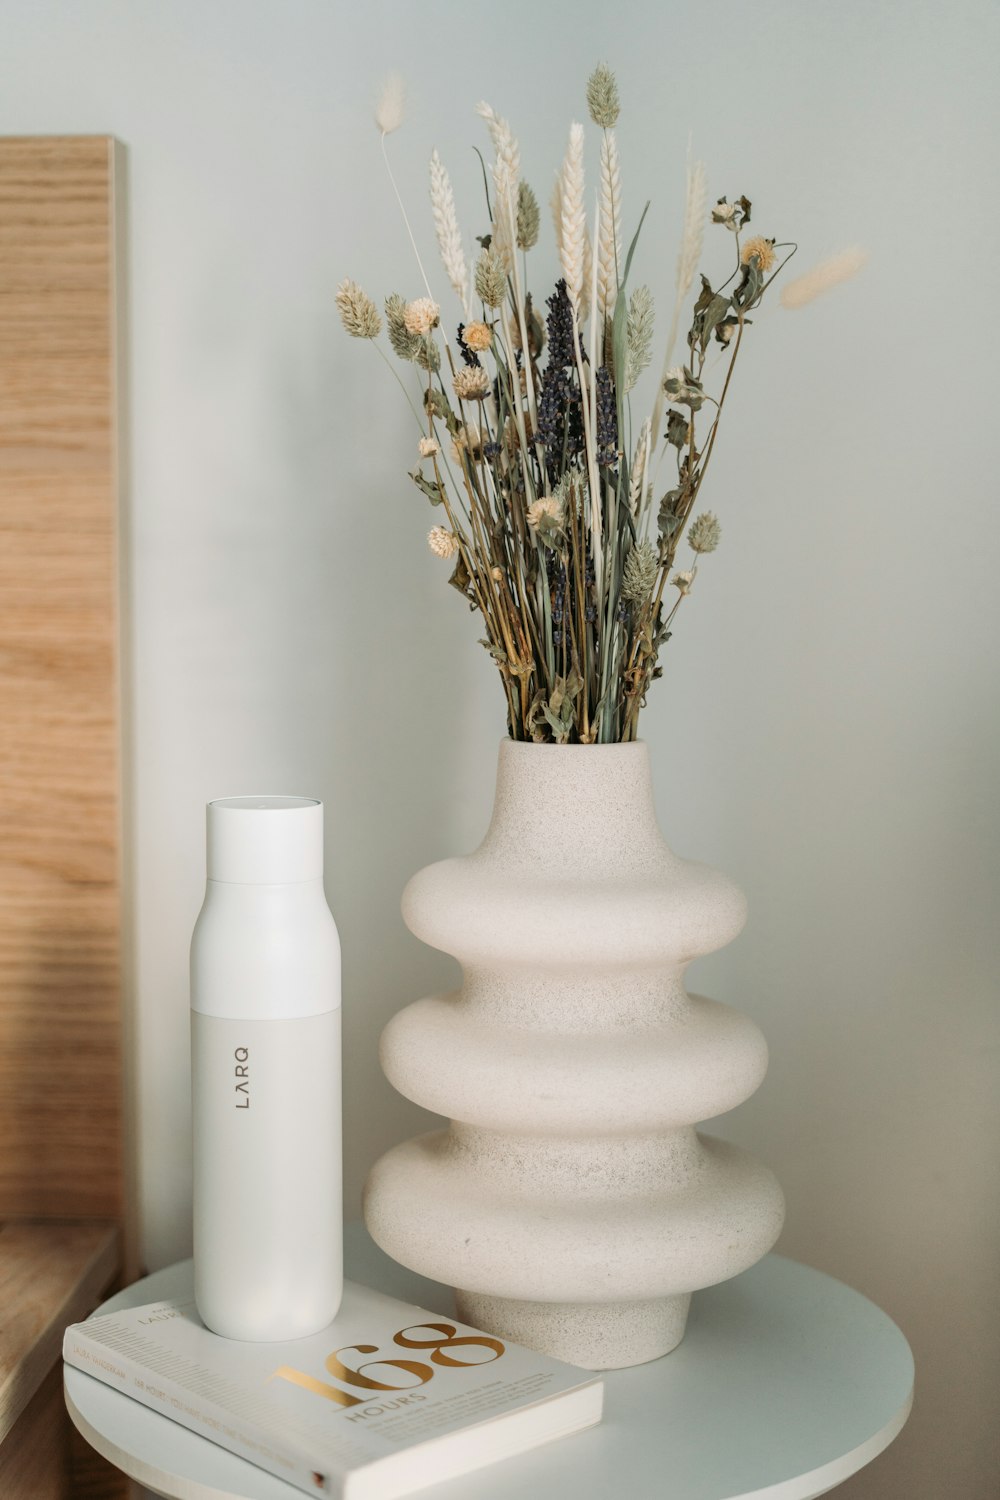 vaso in ceramica bianca con fiori